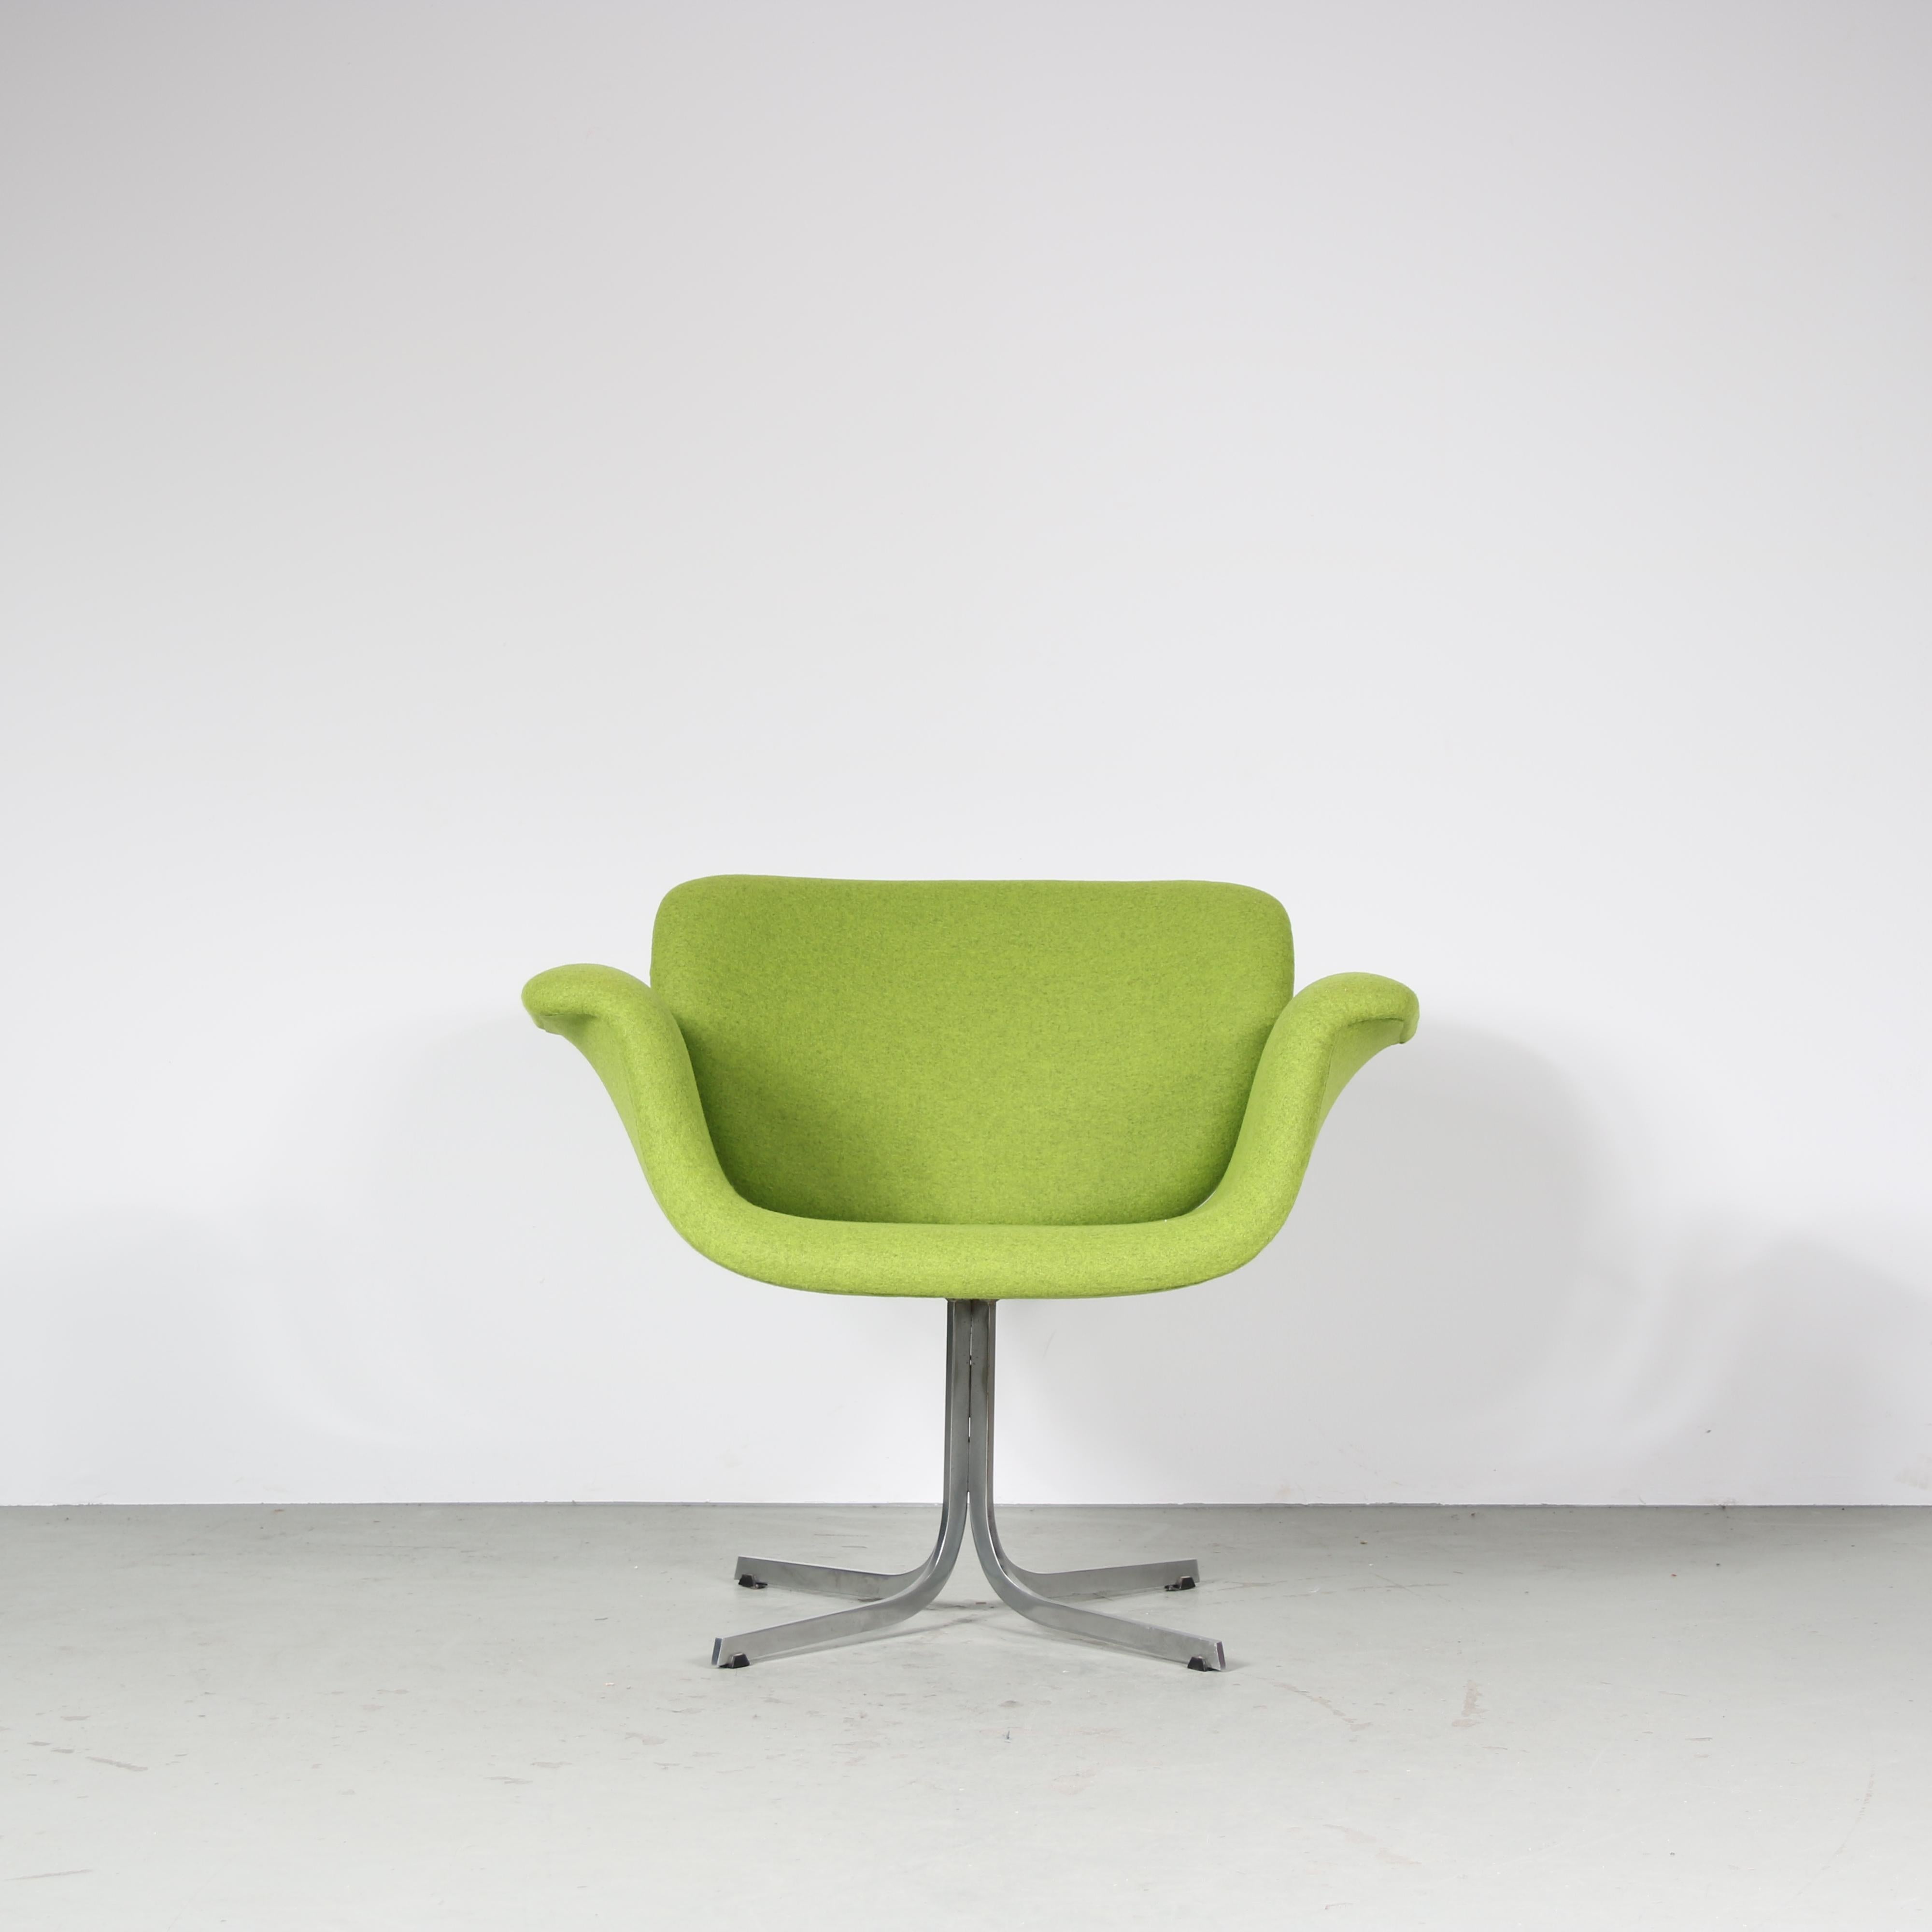 Pierre Paulin “Big Tulip” Chair for Artifort, Netherlands 1960 For Sale 1